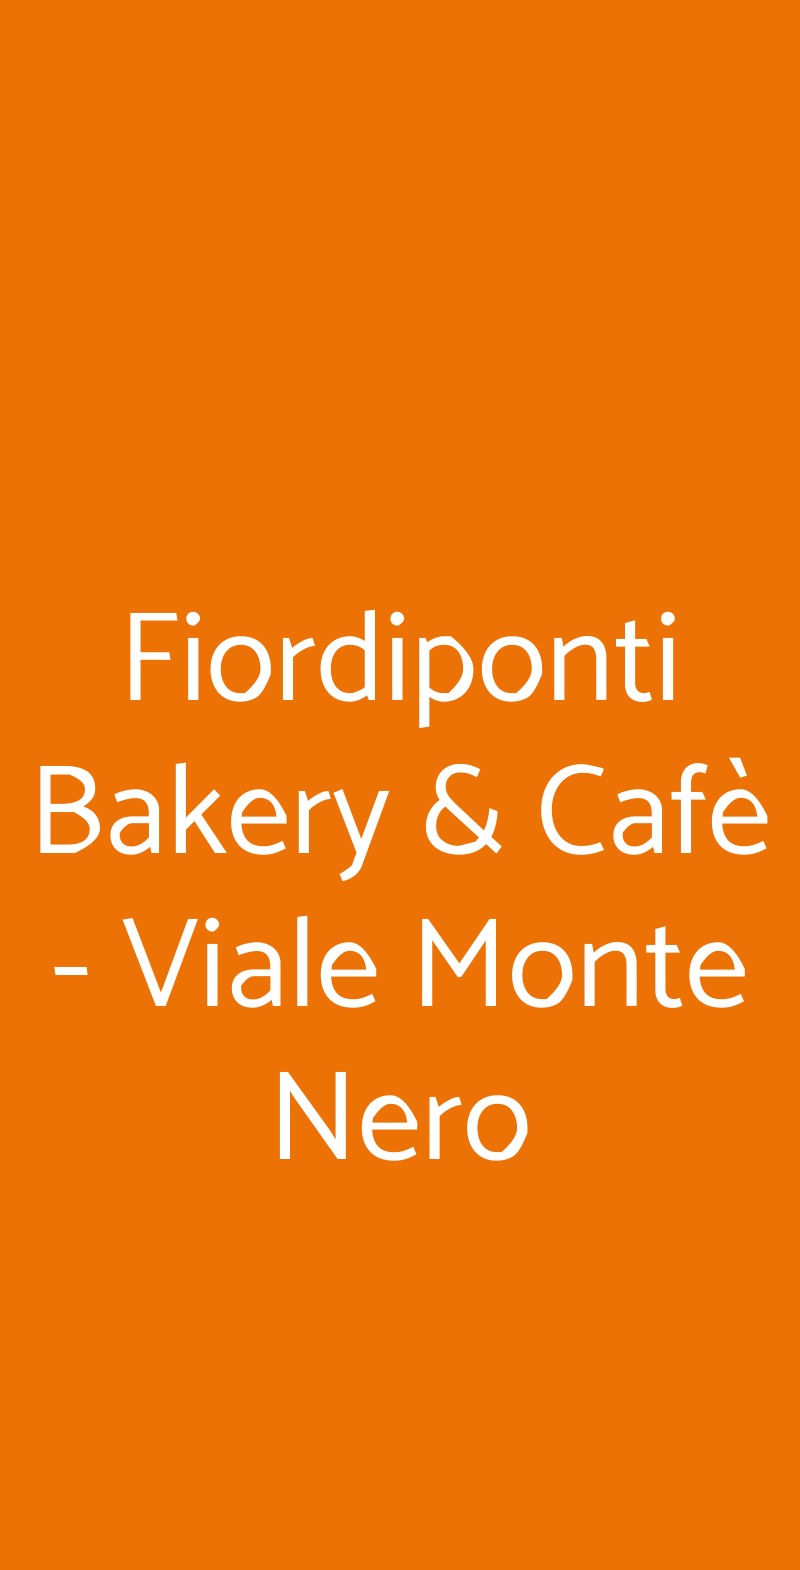 Fiordiponti Bakery & Cafè - Viale Monte Nero Milano menù 1 pagina